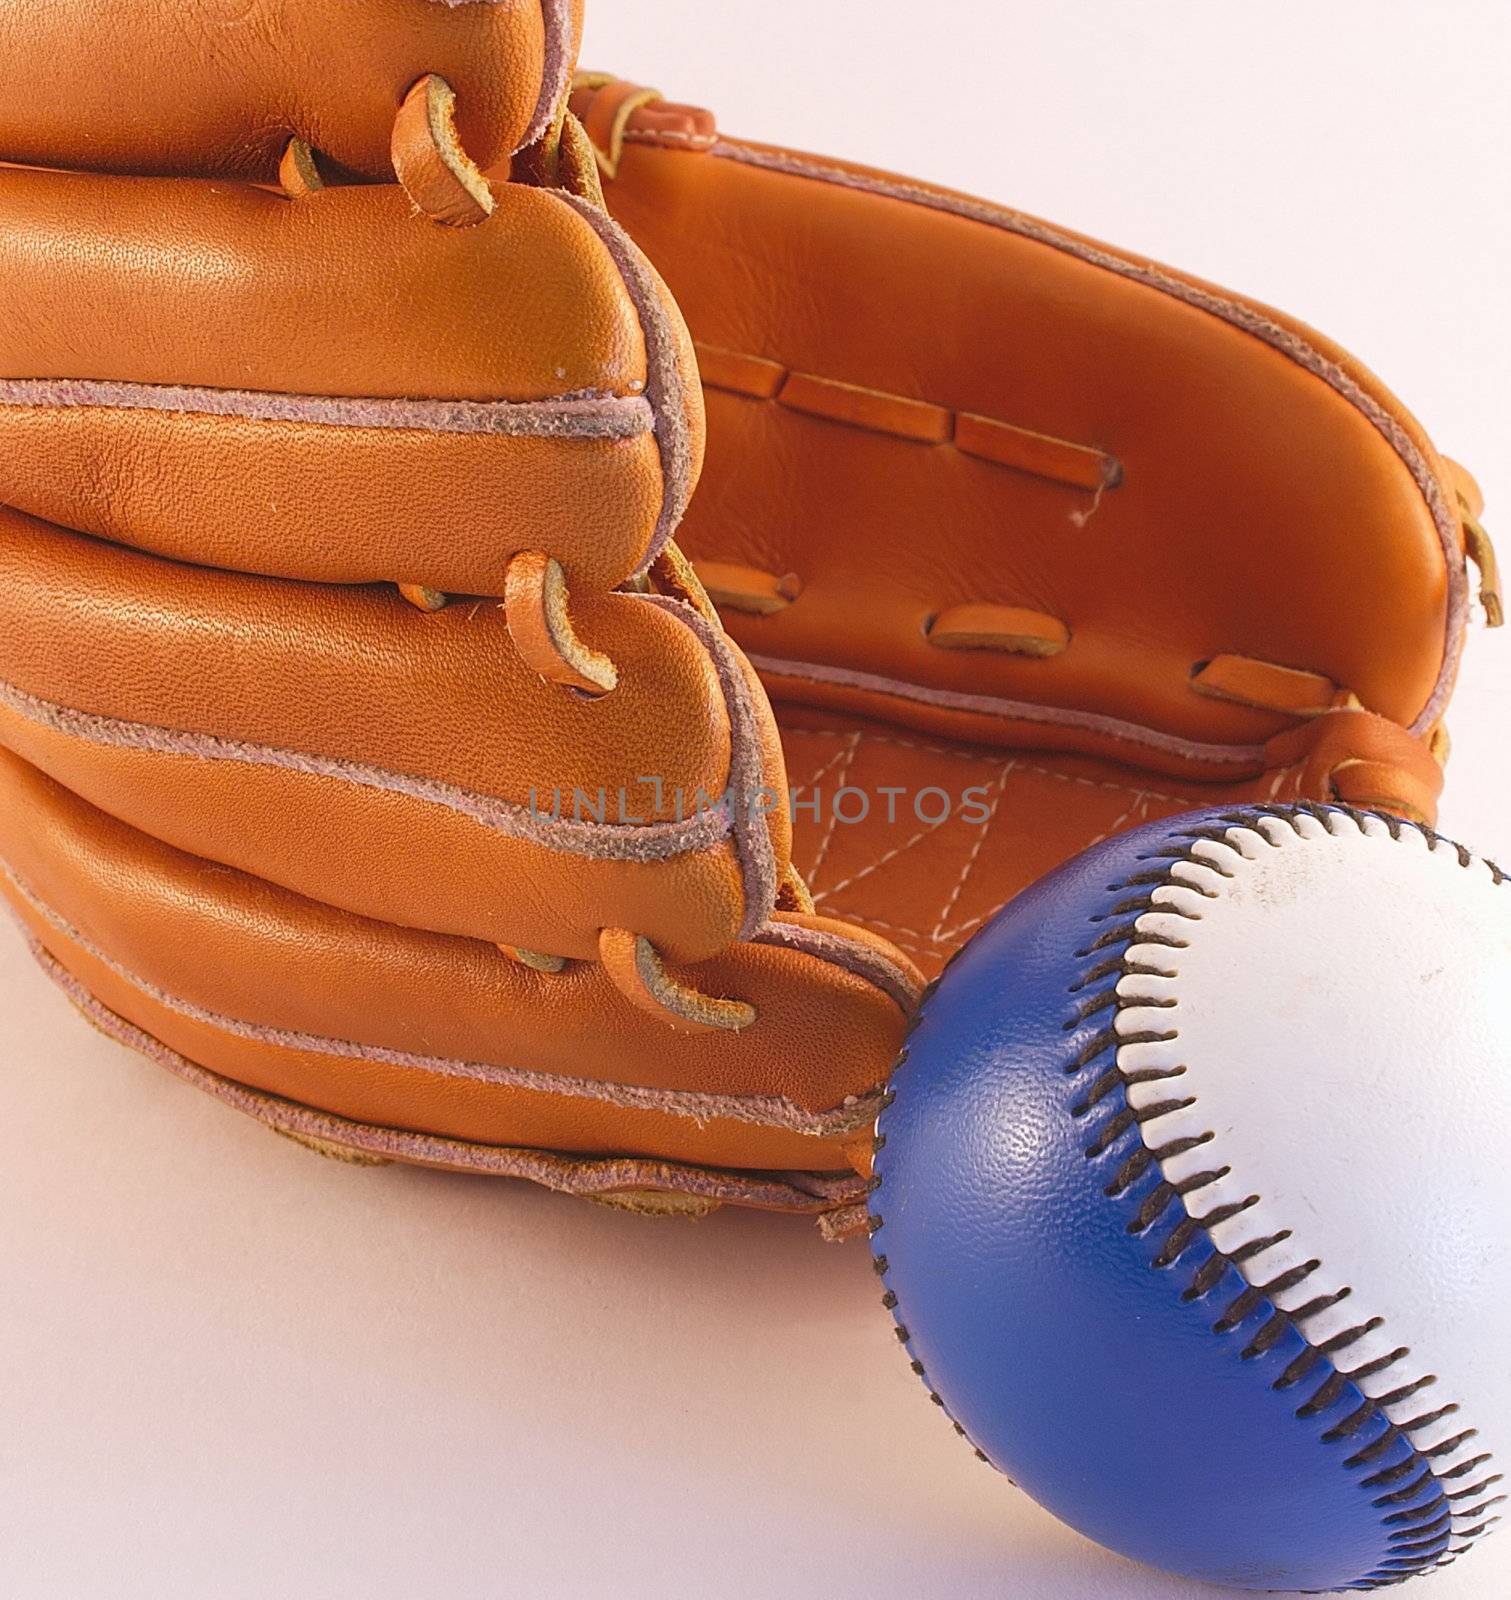 baseball and clove taken closeup